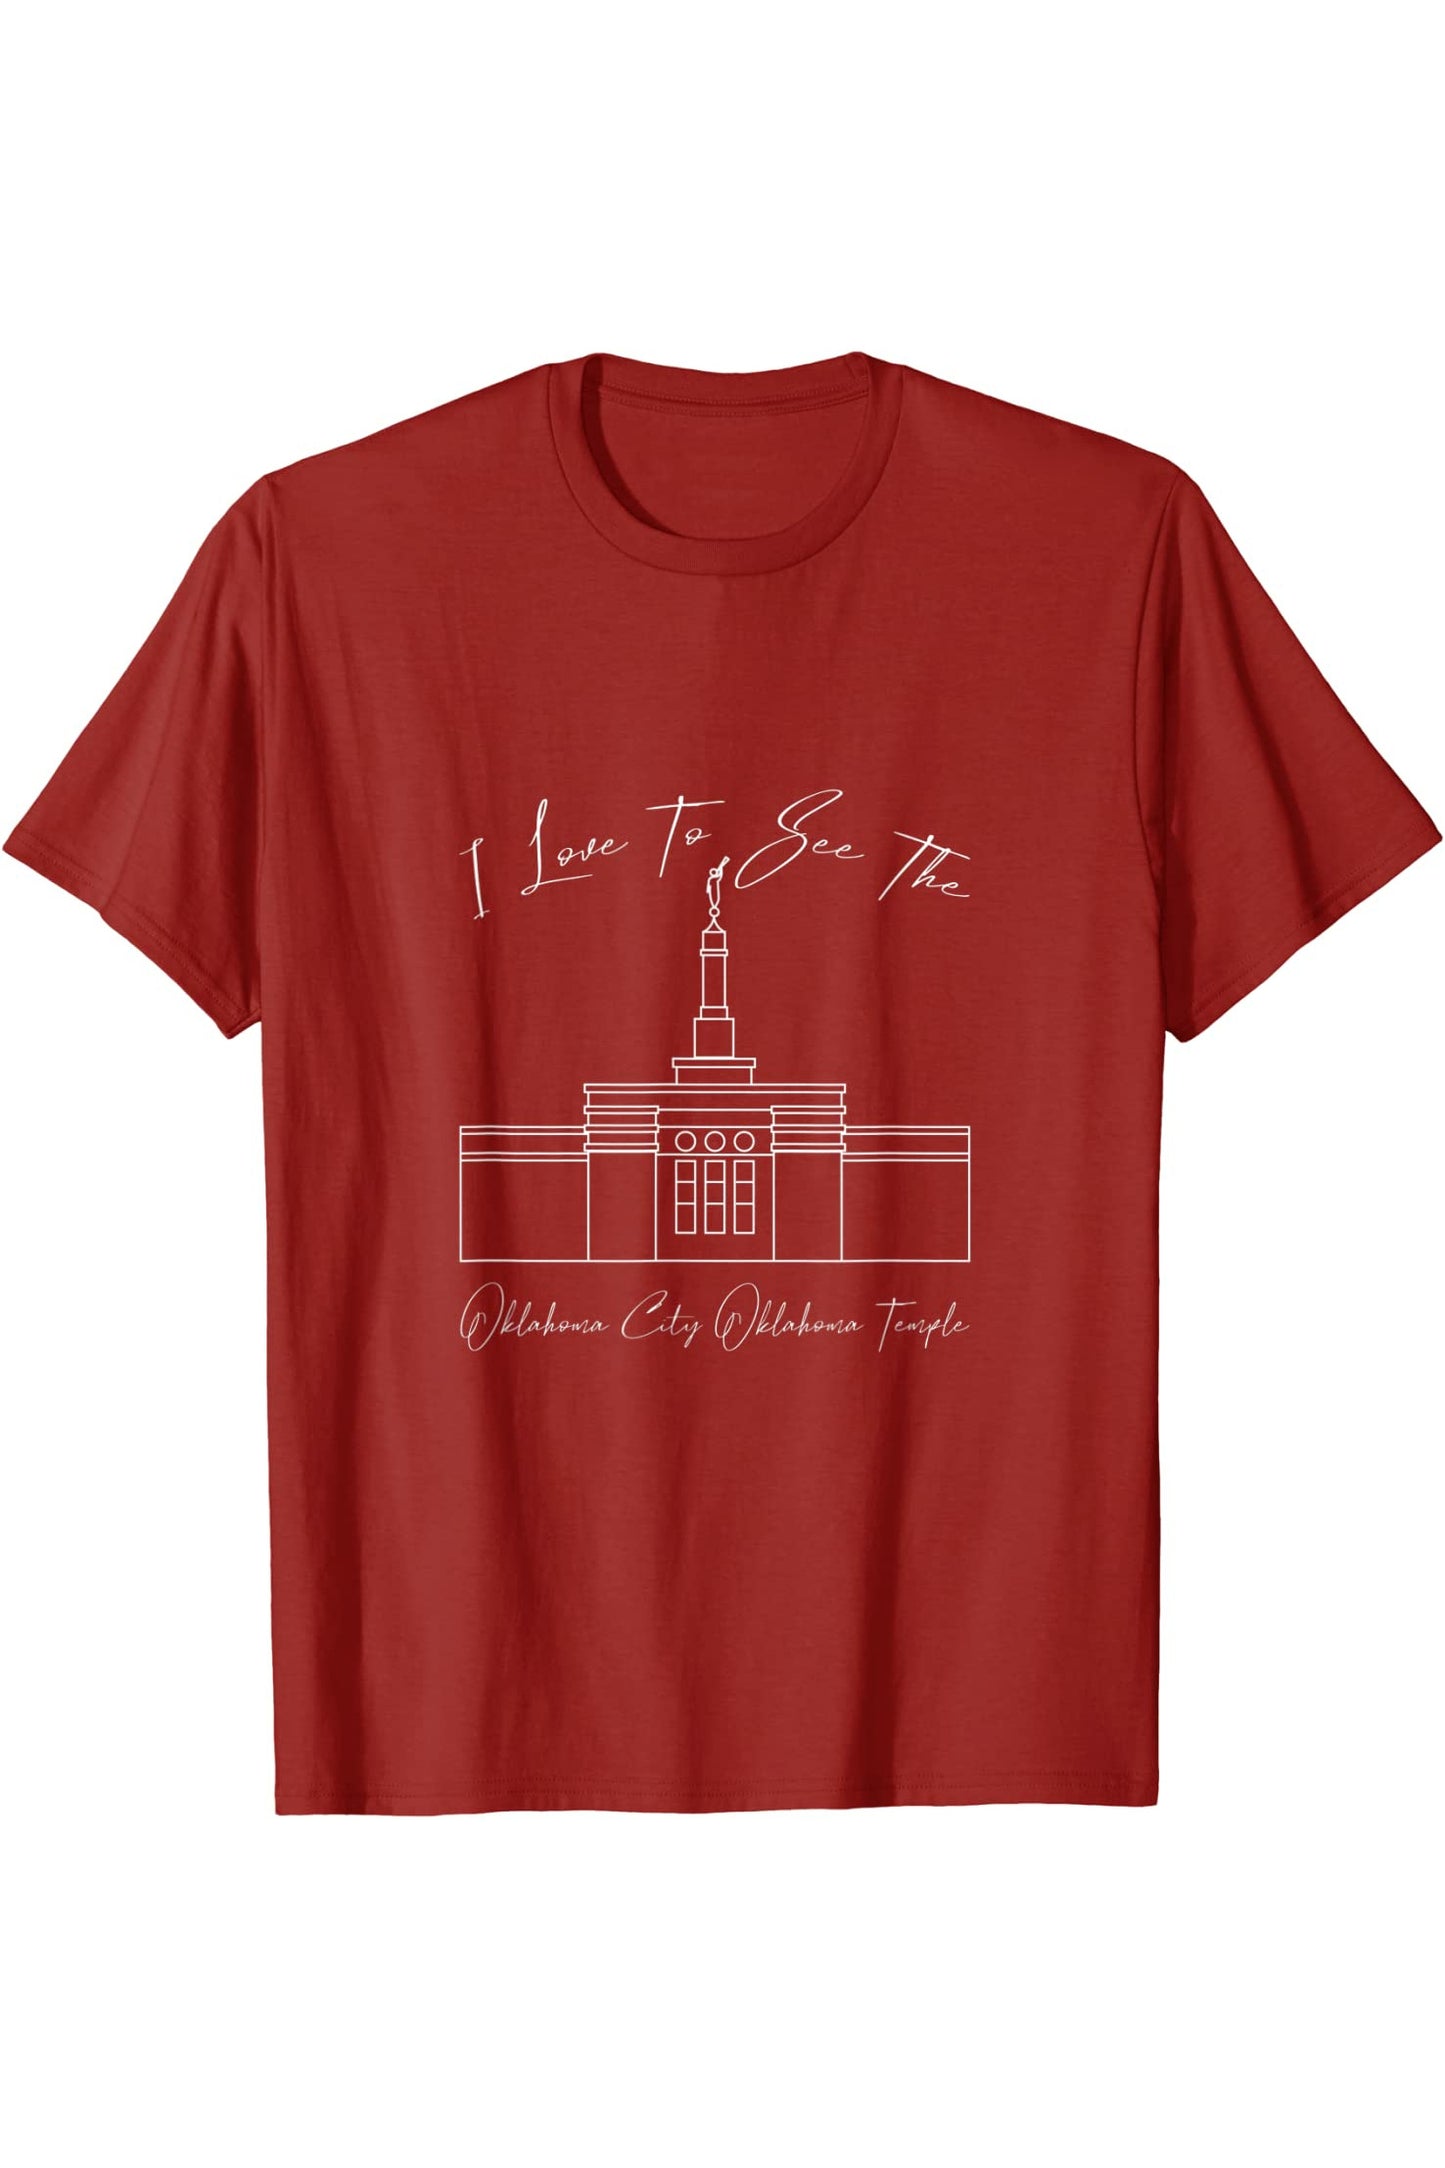 Oklahoma City Oklahoma Temple T-Shirt - Calligraphy Style (English) US